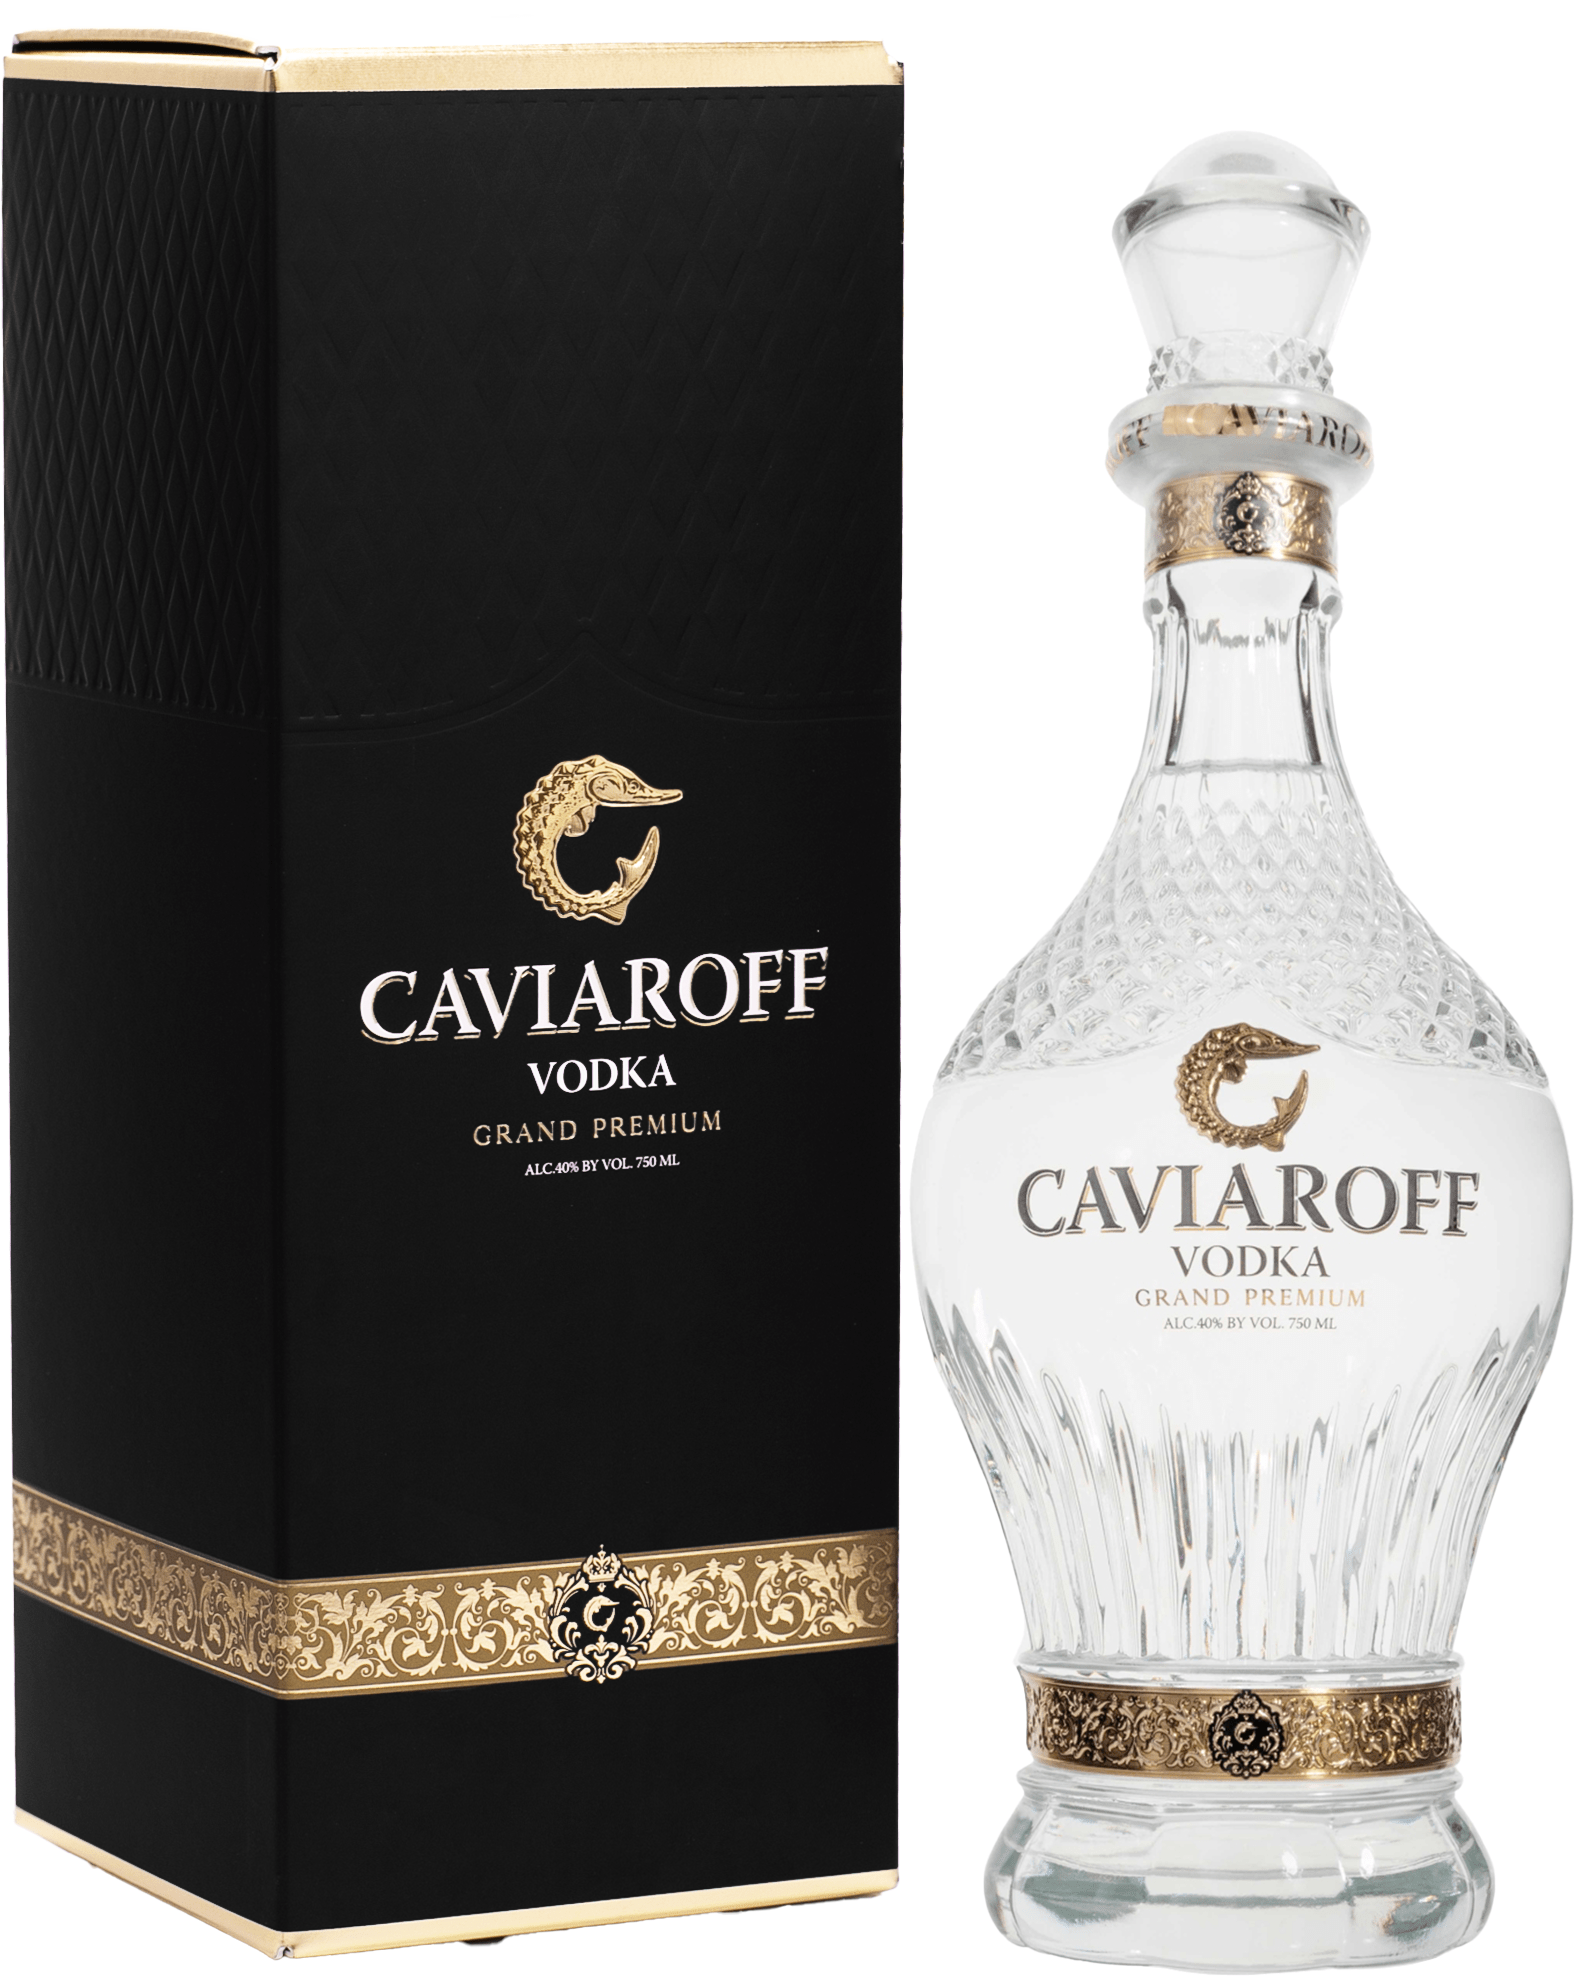 Caviaroff Vodka Grand Premium 40% 0,75l